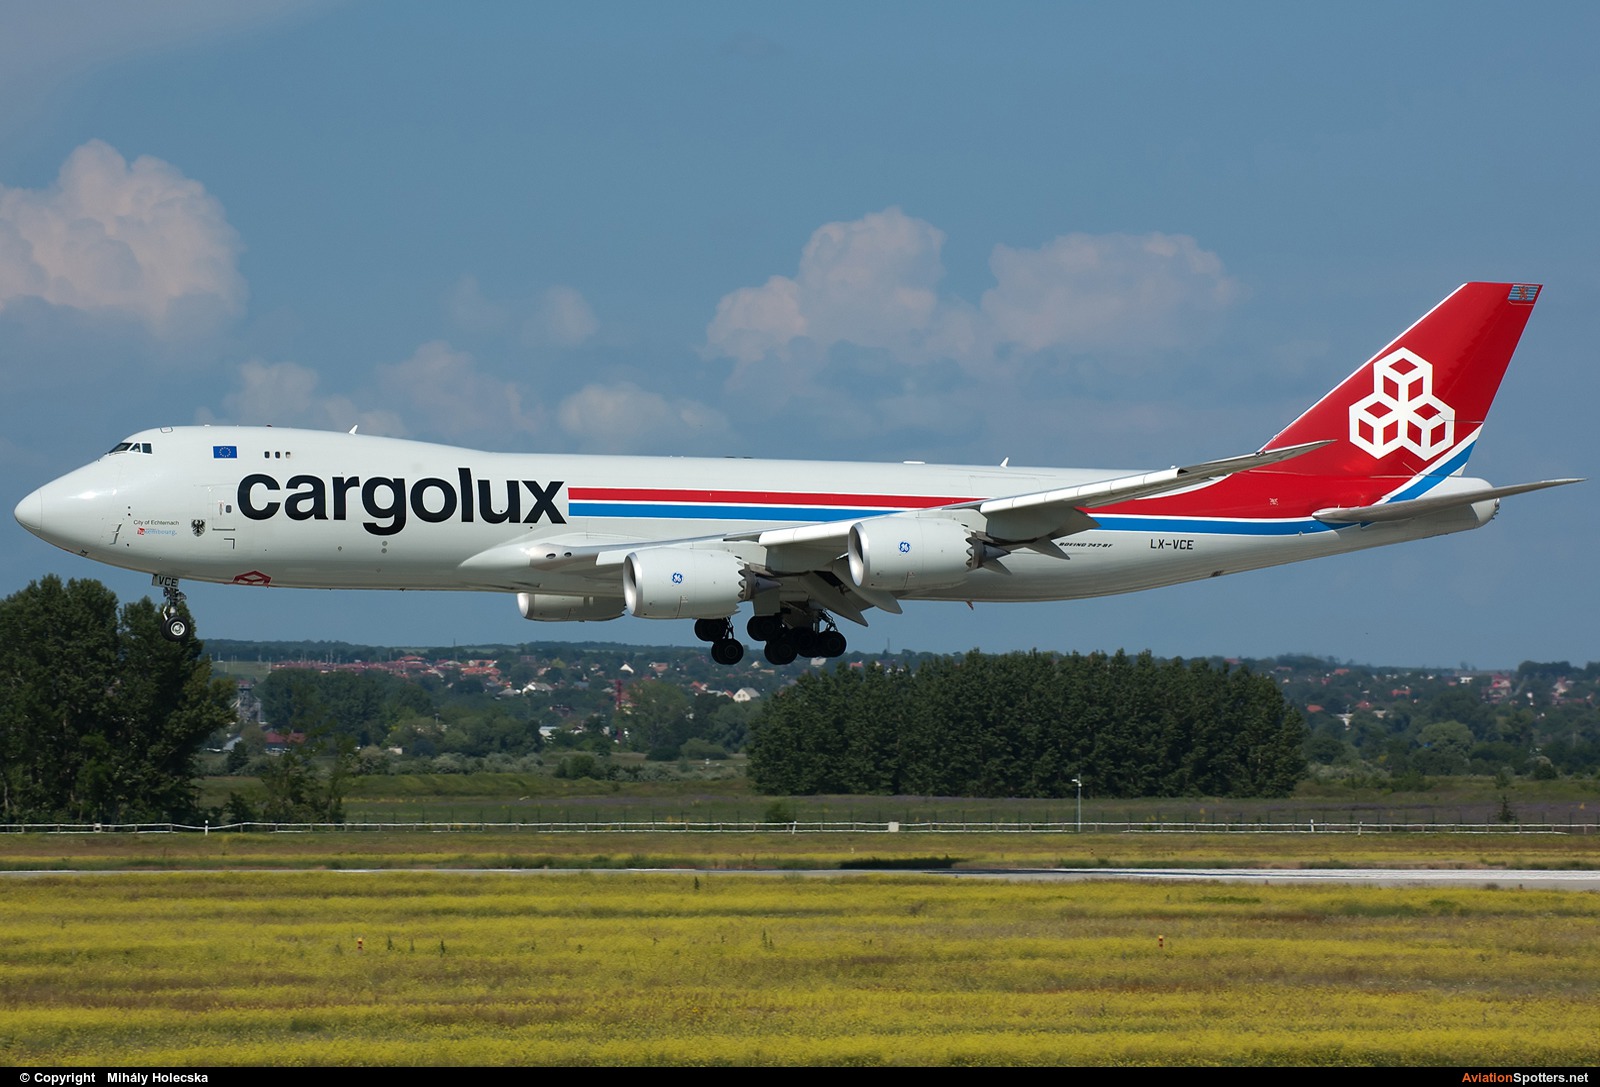 Cargolux  -  747-8F  (LX-VCE) By Mihály Holecska (Misixx)